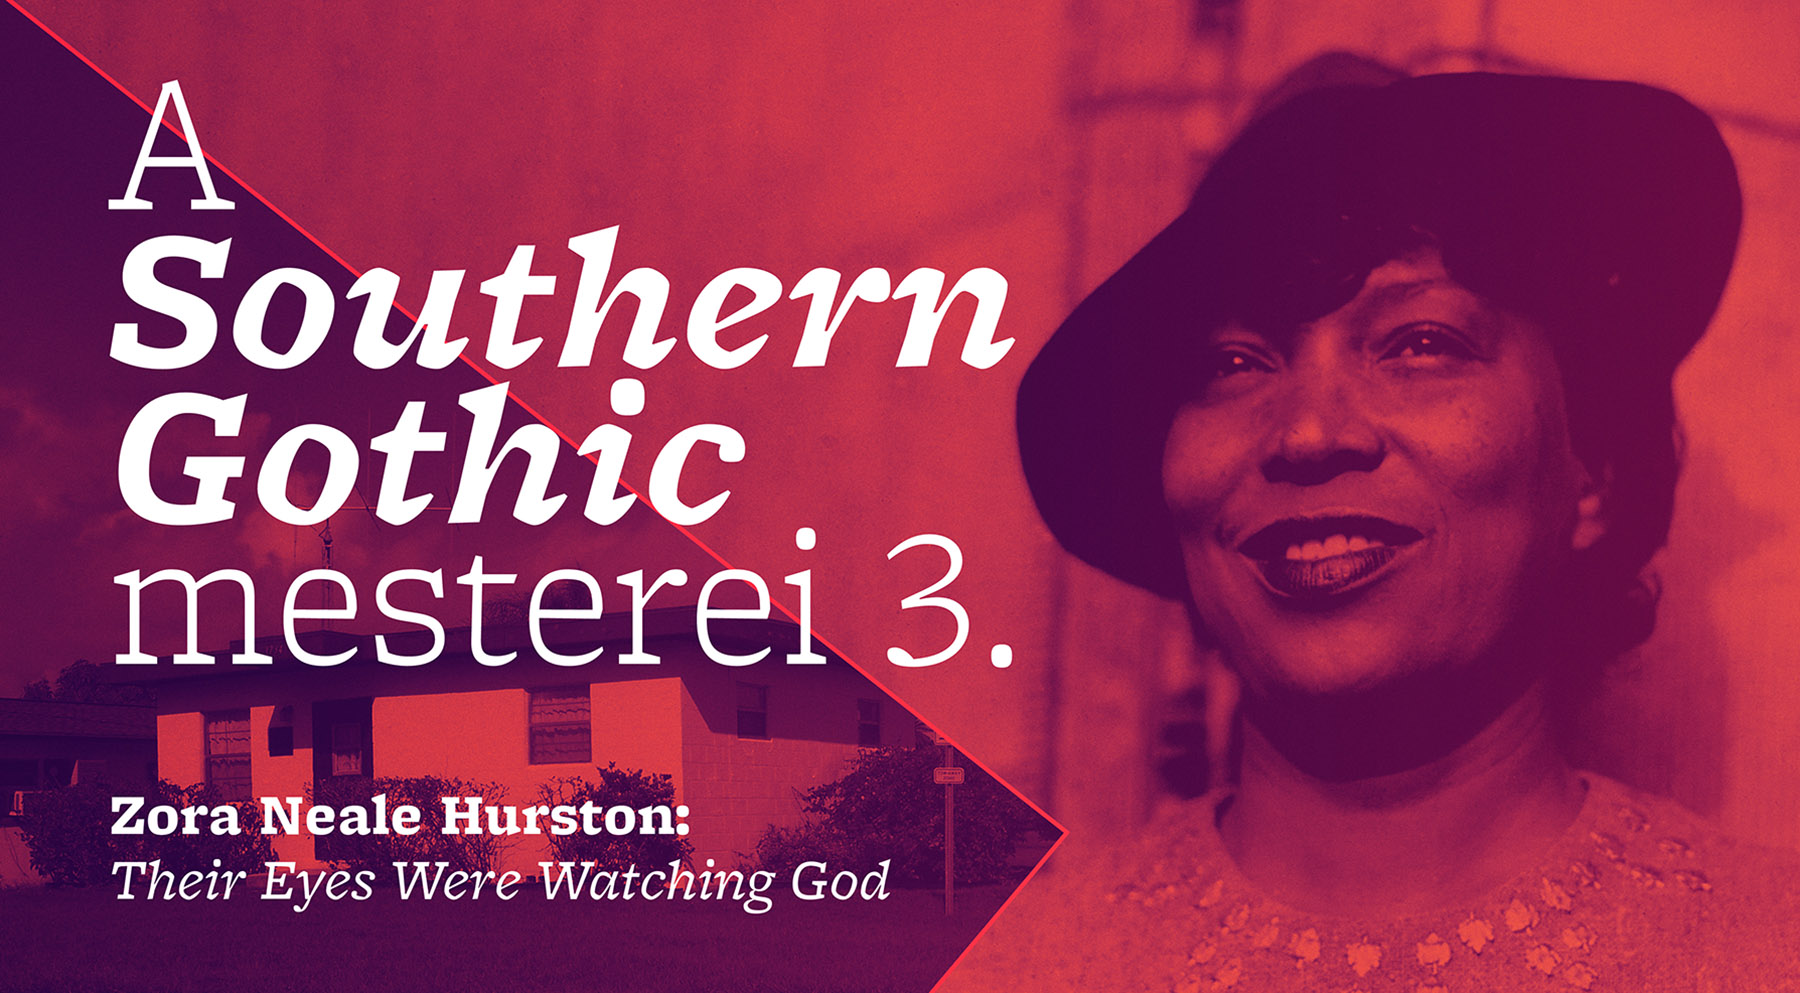 A Southern Gothic mesterei 3. (Zora Neale Hurston: Their Eyes Were Watching God)